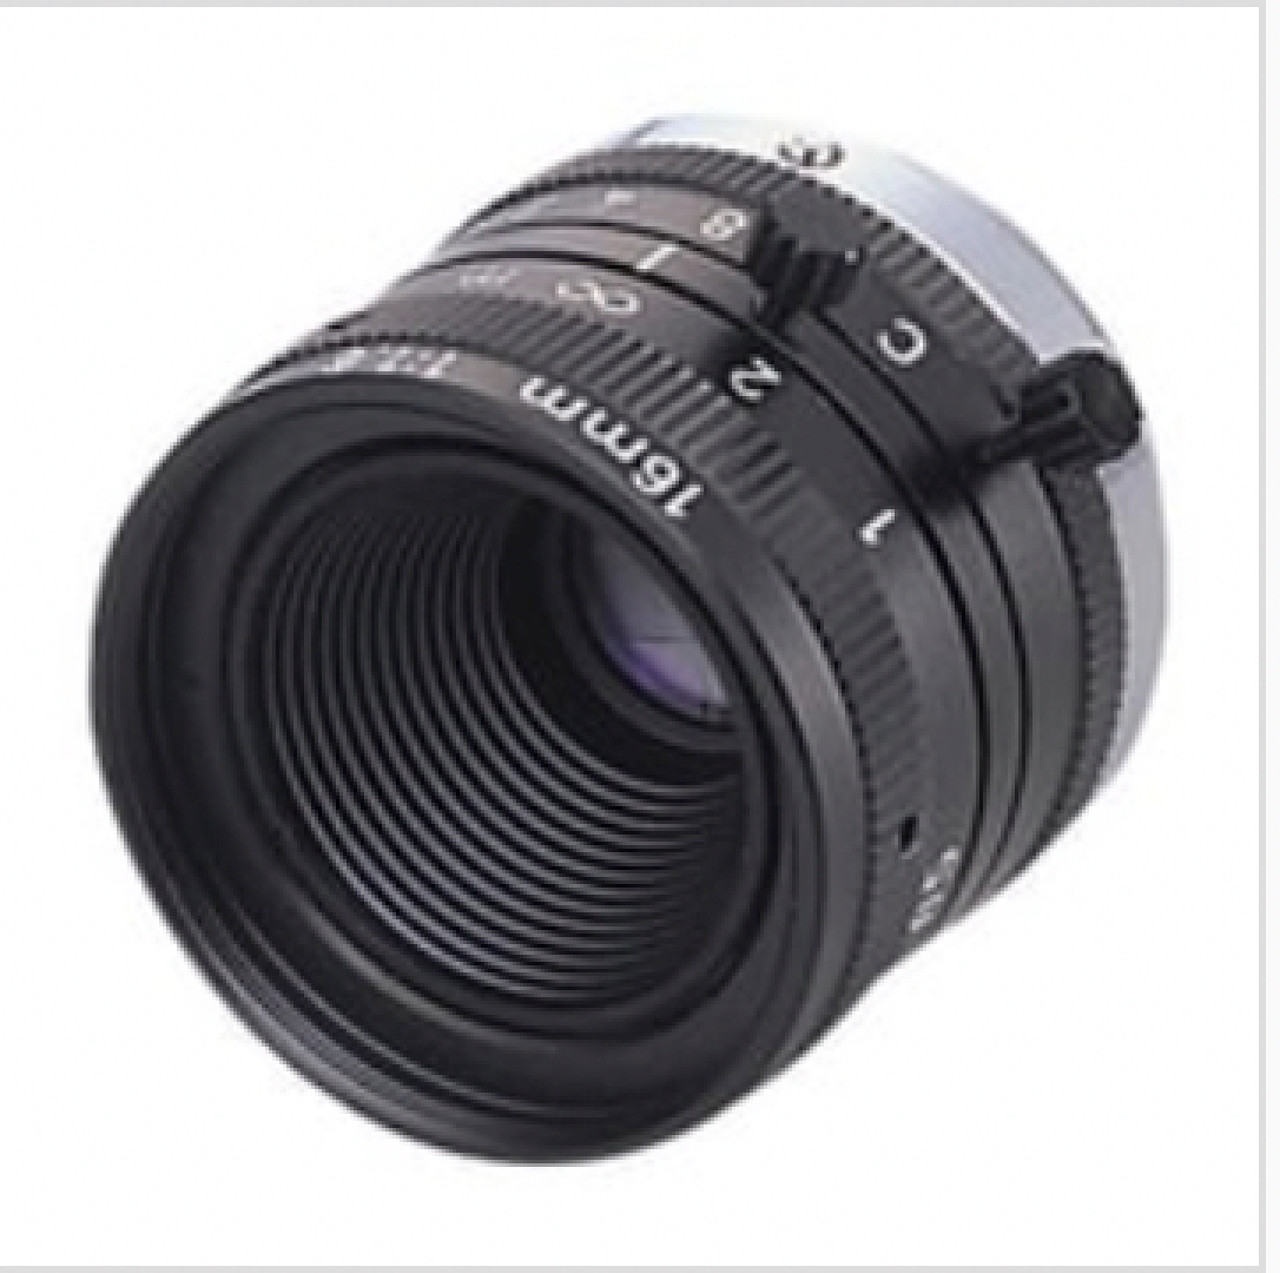 Keyence CV-L16 Lenses (for Machine Vision), Lens, 16mm, F1.6 to CLOSE [New]